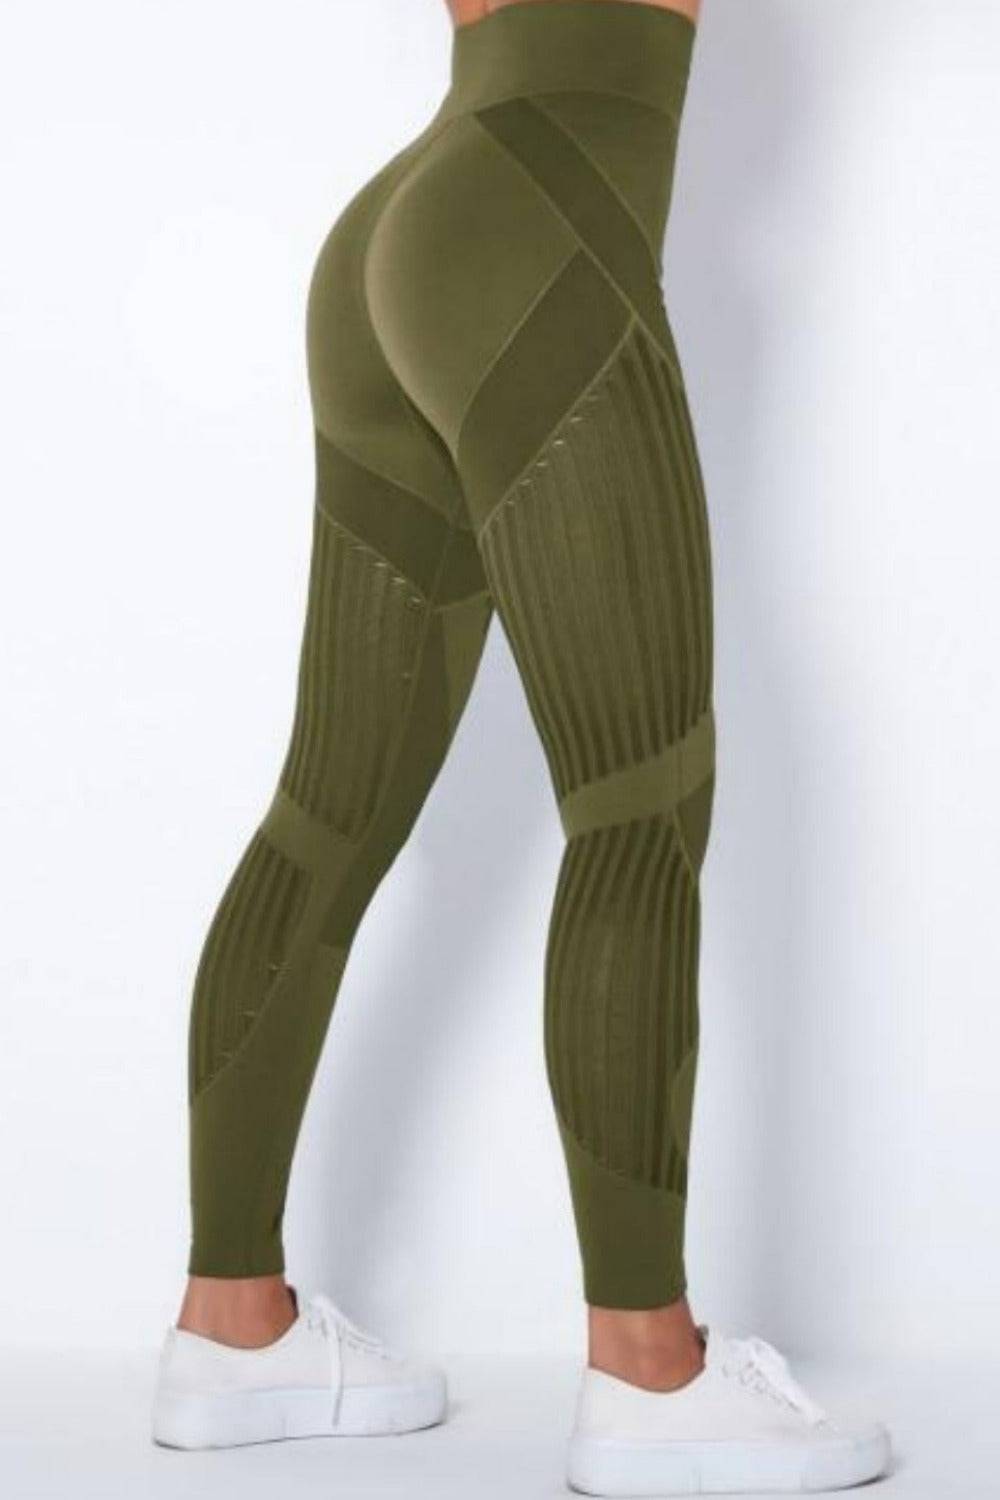 Tummy Control High Waist Seamless Sport Yoga Pants Leggings - Green - TGC Boutique - Yoga Leggings